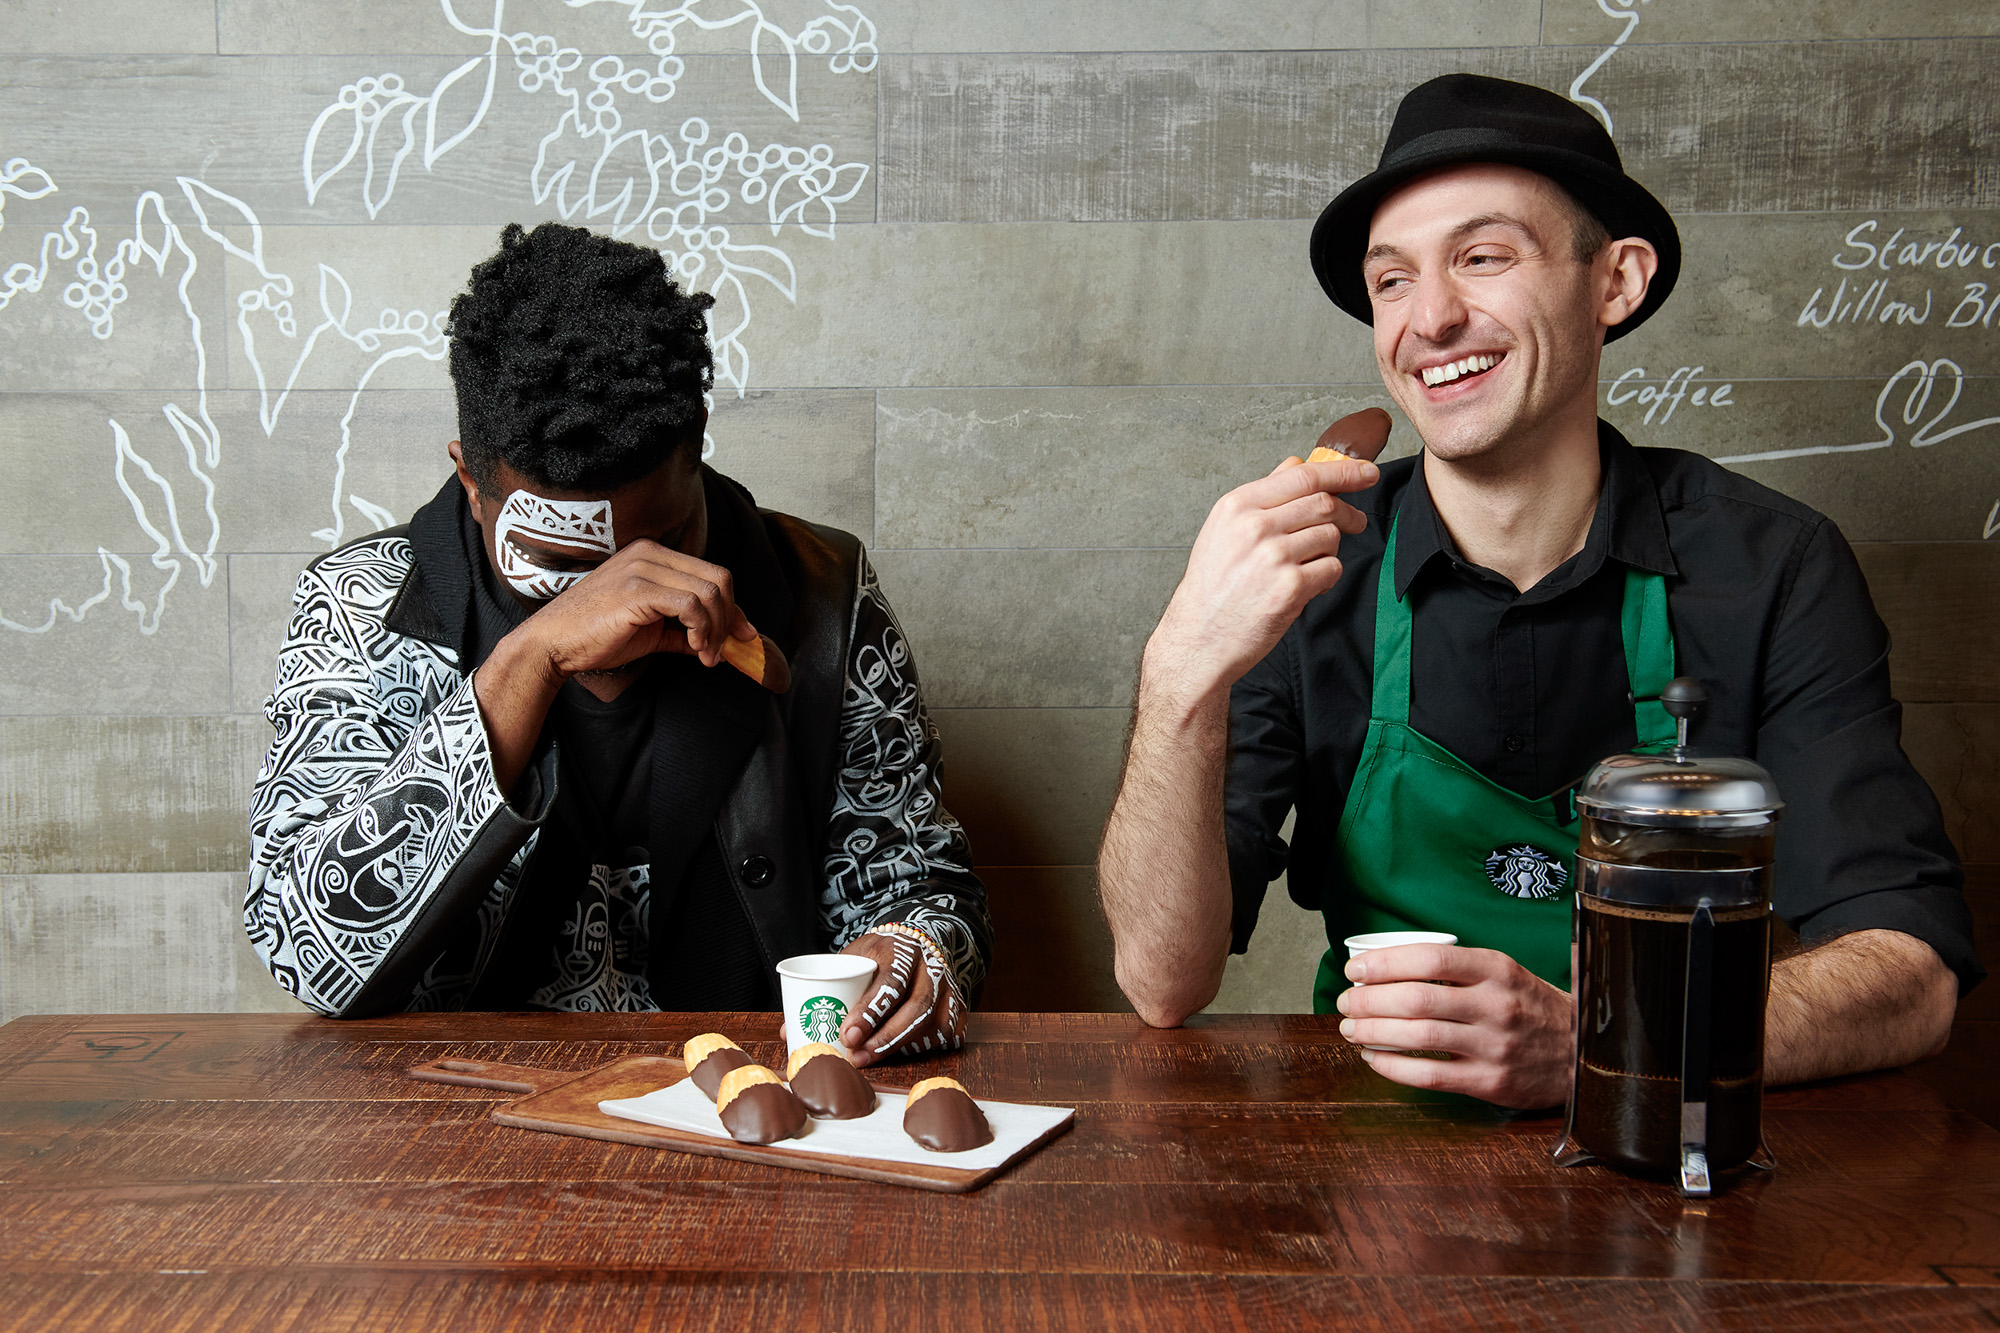 NYC Food Photographer - Art + Coffee Starbucks Book